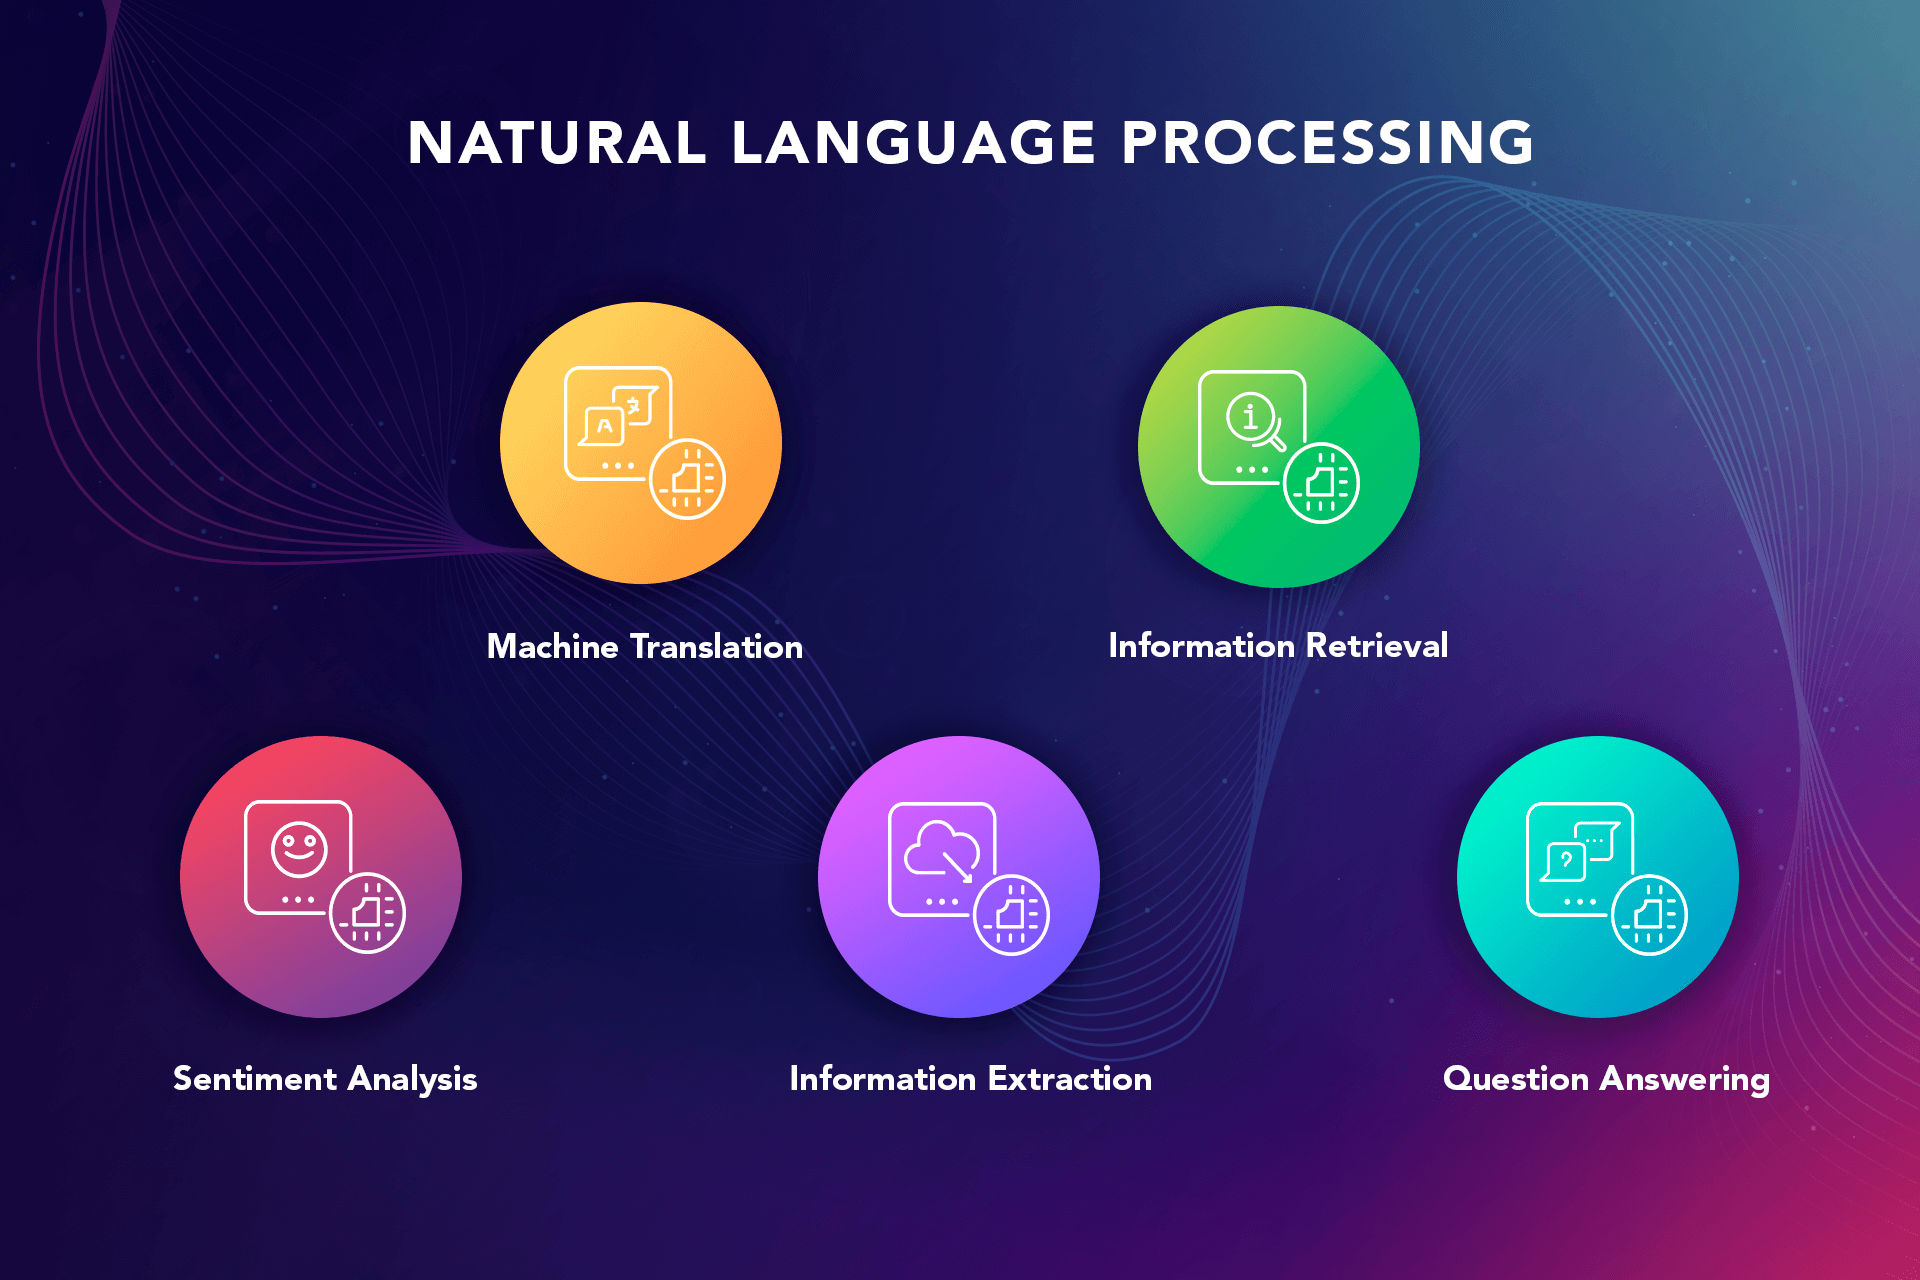 Natural Language Processing 